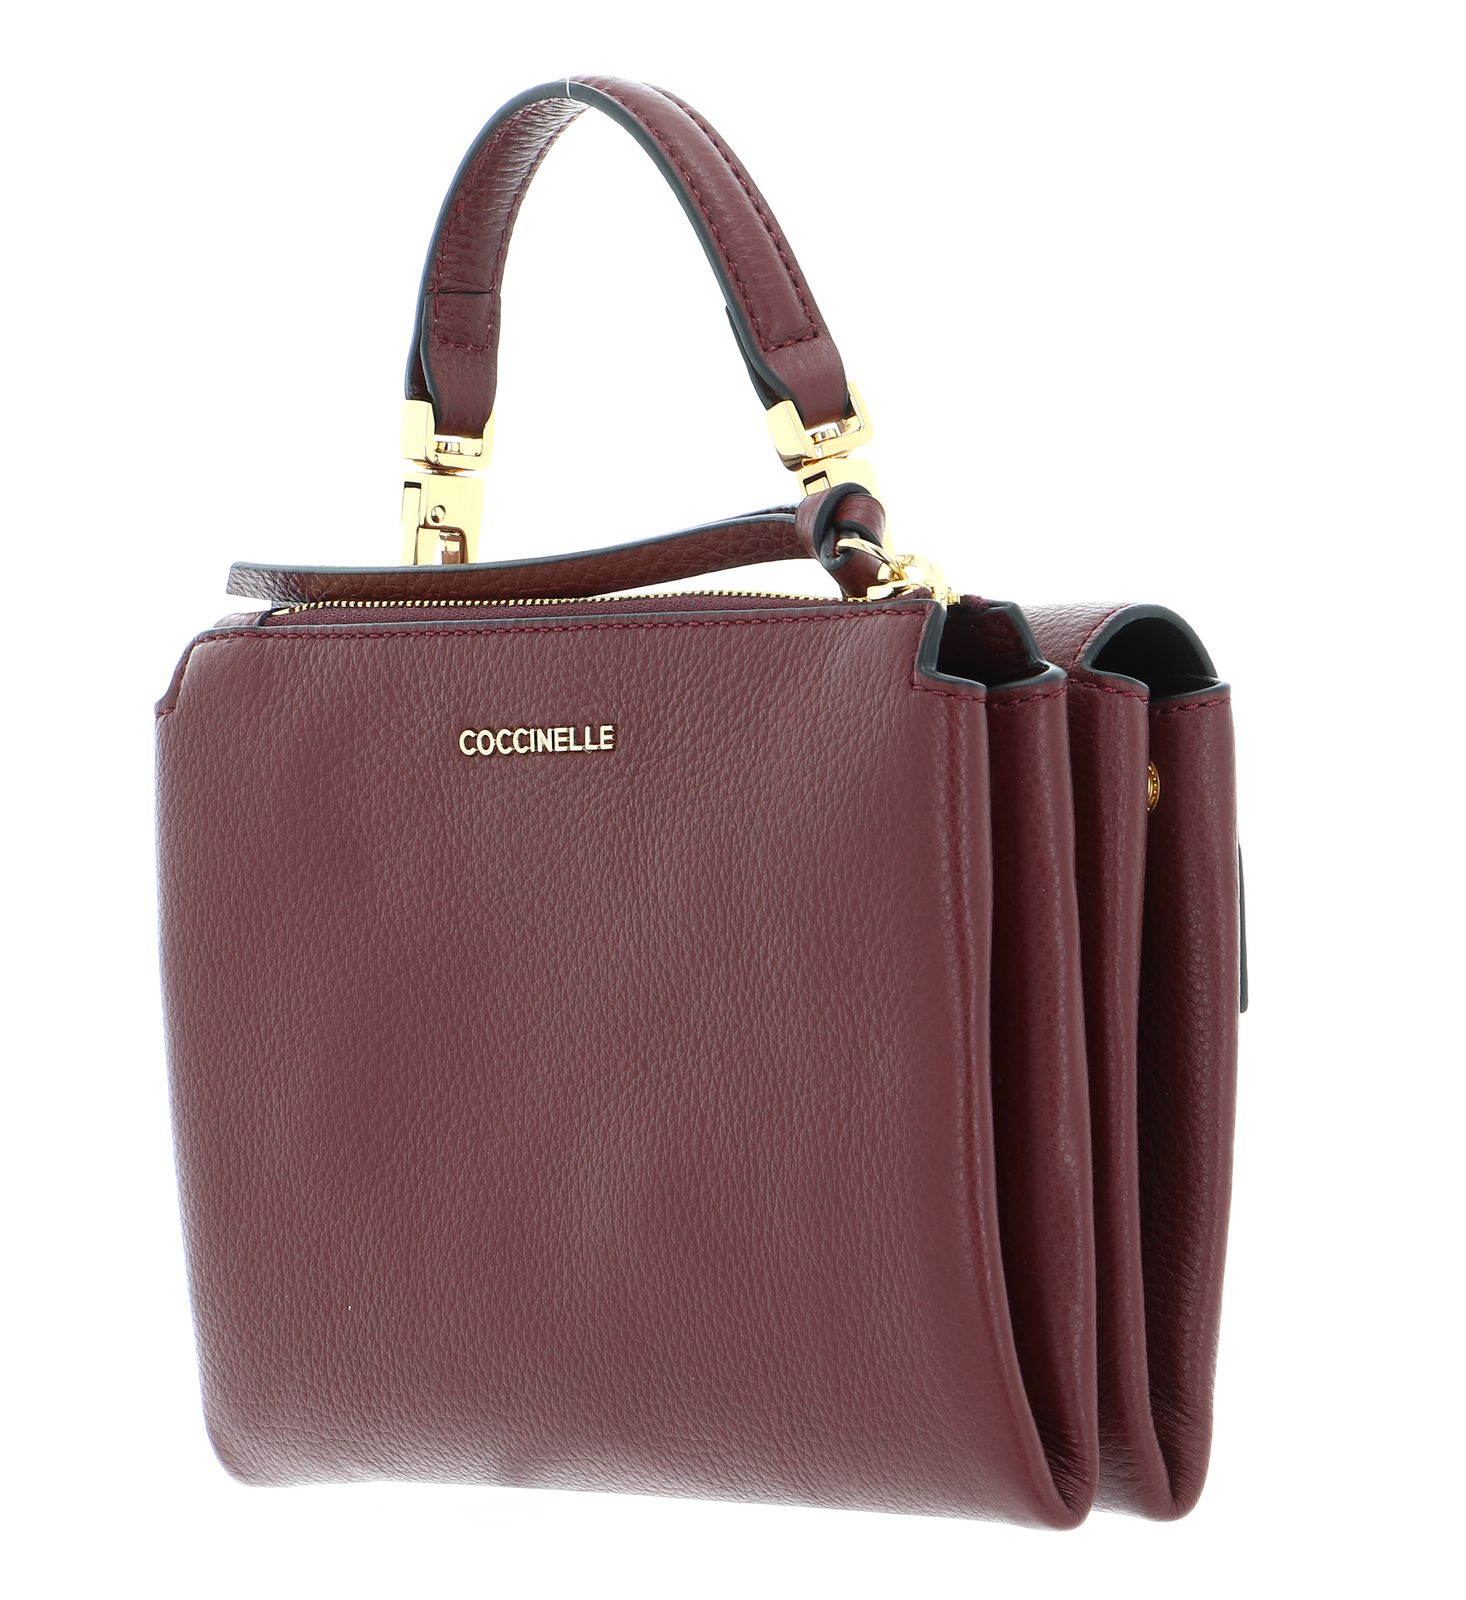 COCCINELLE handbag Arlettis Small Handbag | Buy bags, purses & accessories  online | modeherz